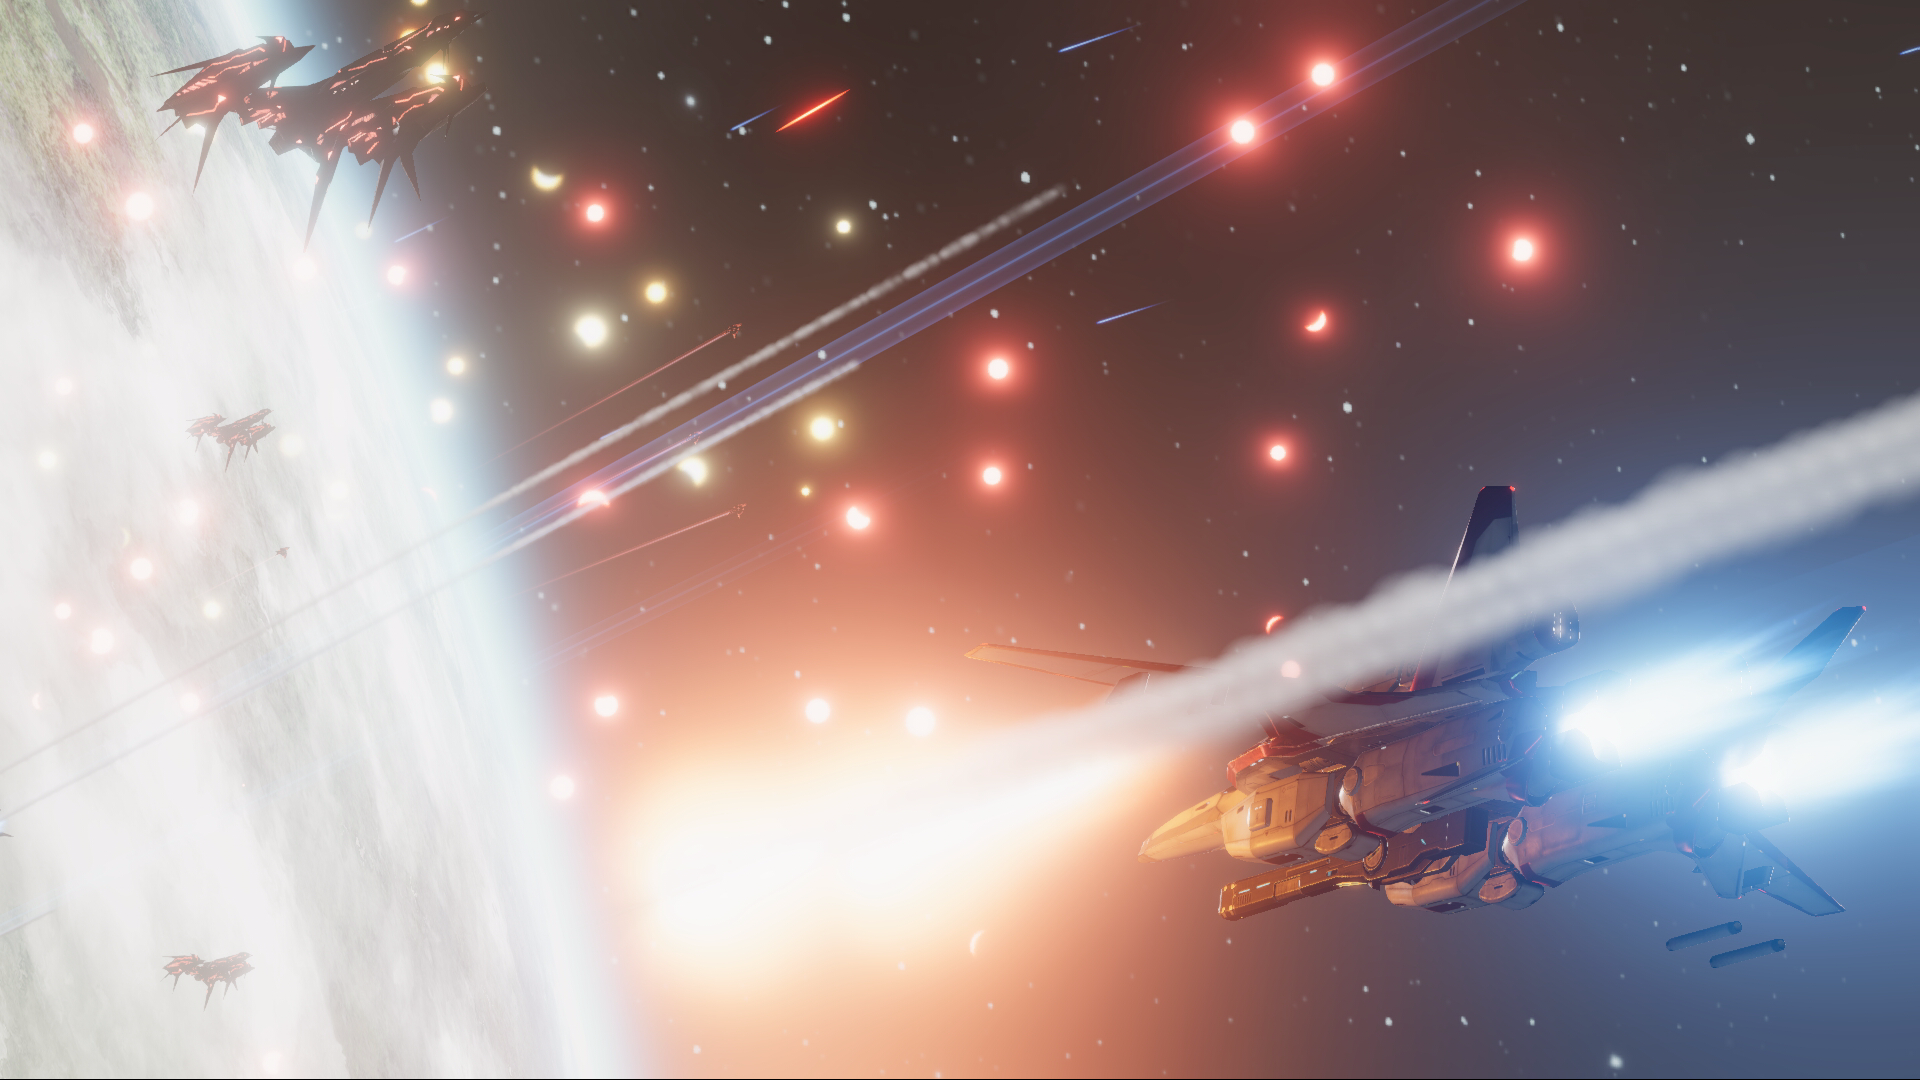 Players battle the merciless aliens in a directed narrative in Infinite Fleet